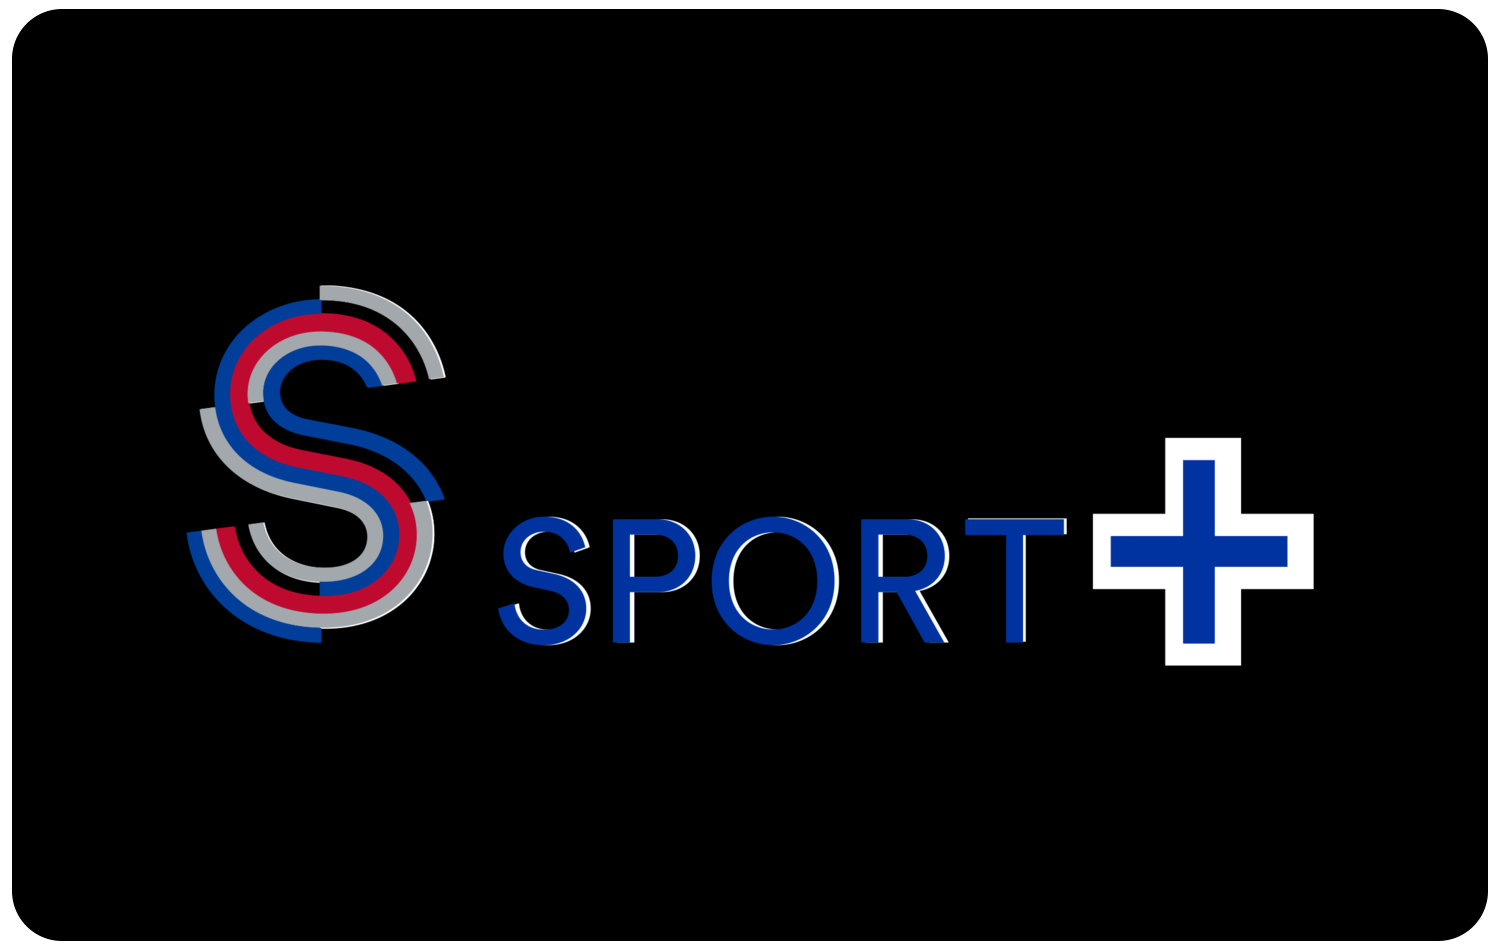 S Sport Plus. Sport Plus izle. Плюс логотип. S Sports Plus Canli.